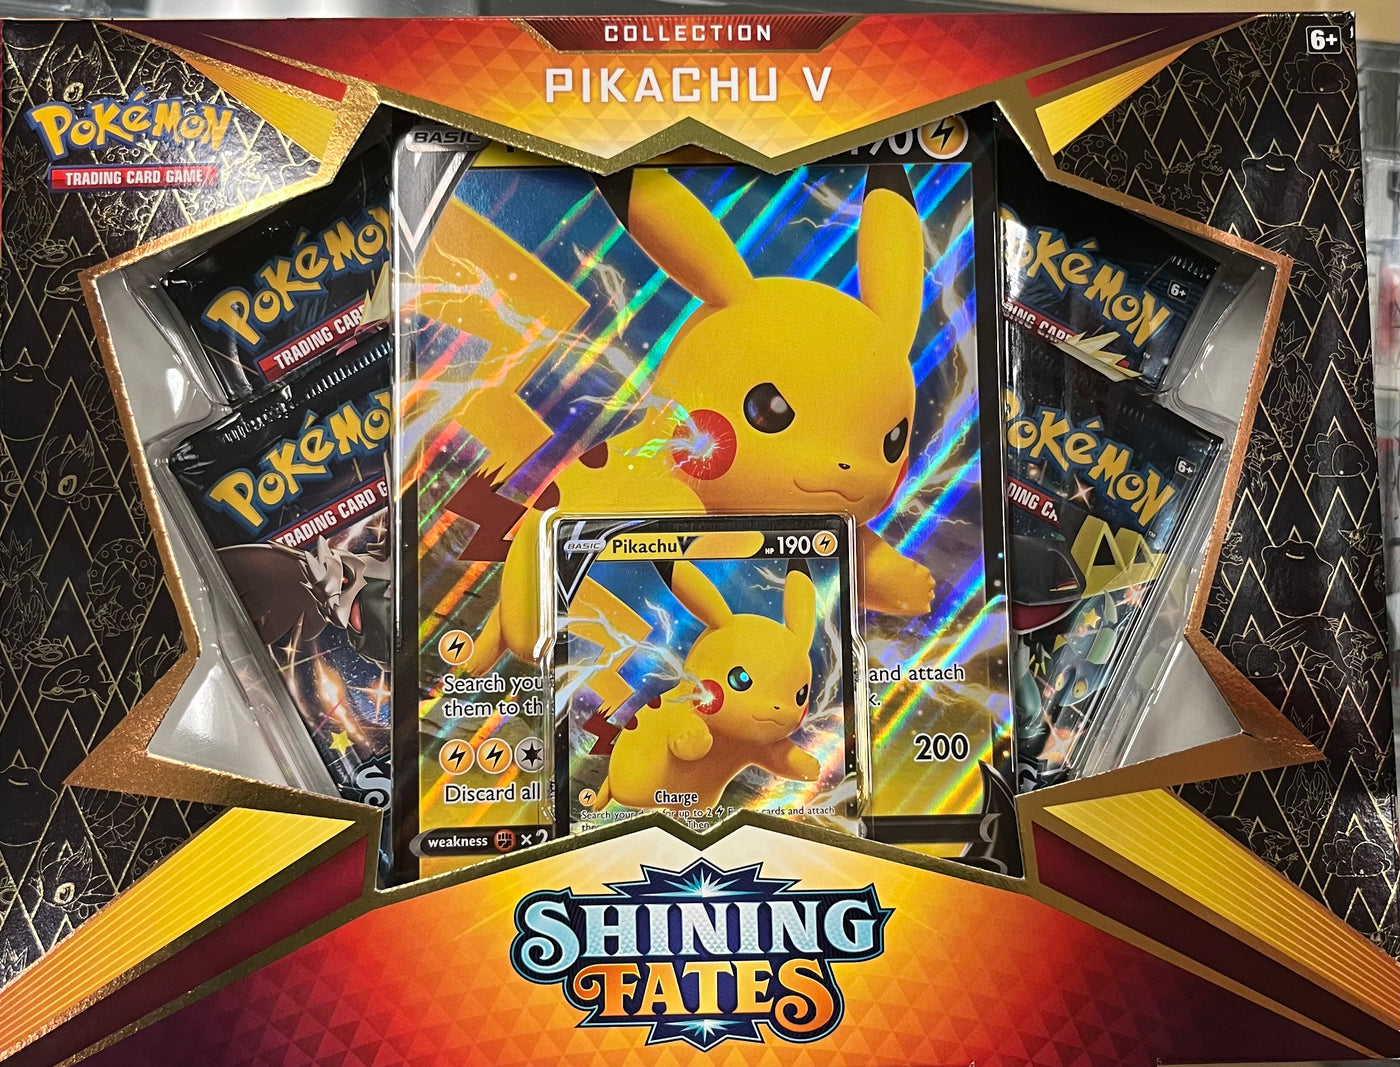 Pokémon Shining Fates Pikachu V Collection Box